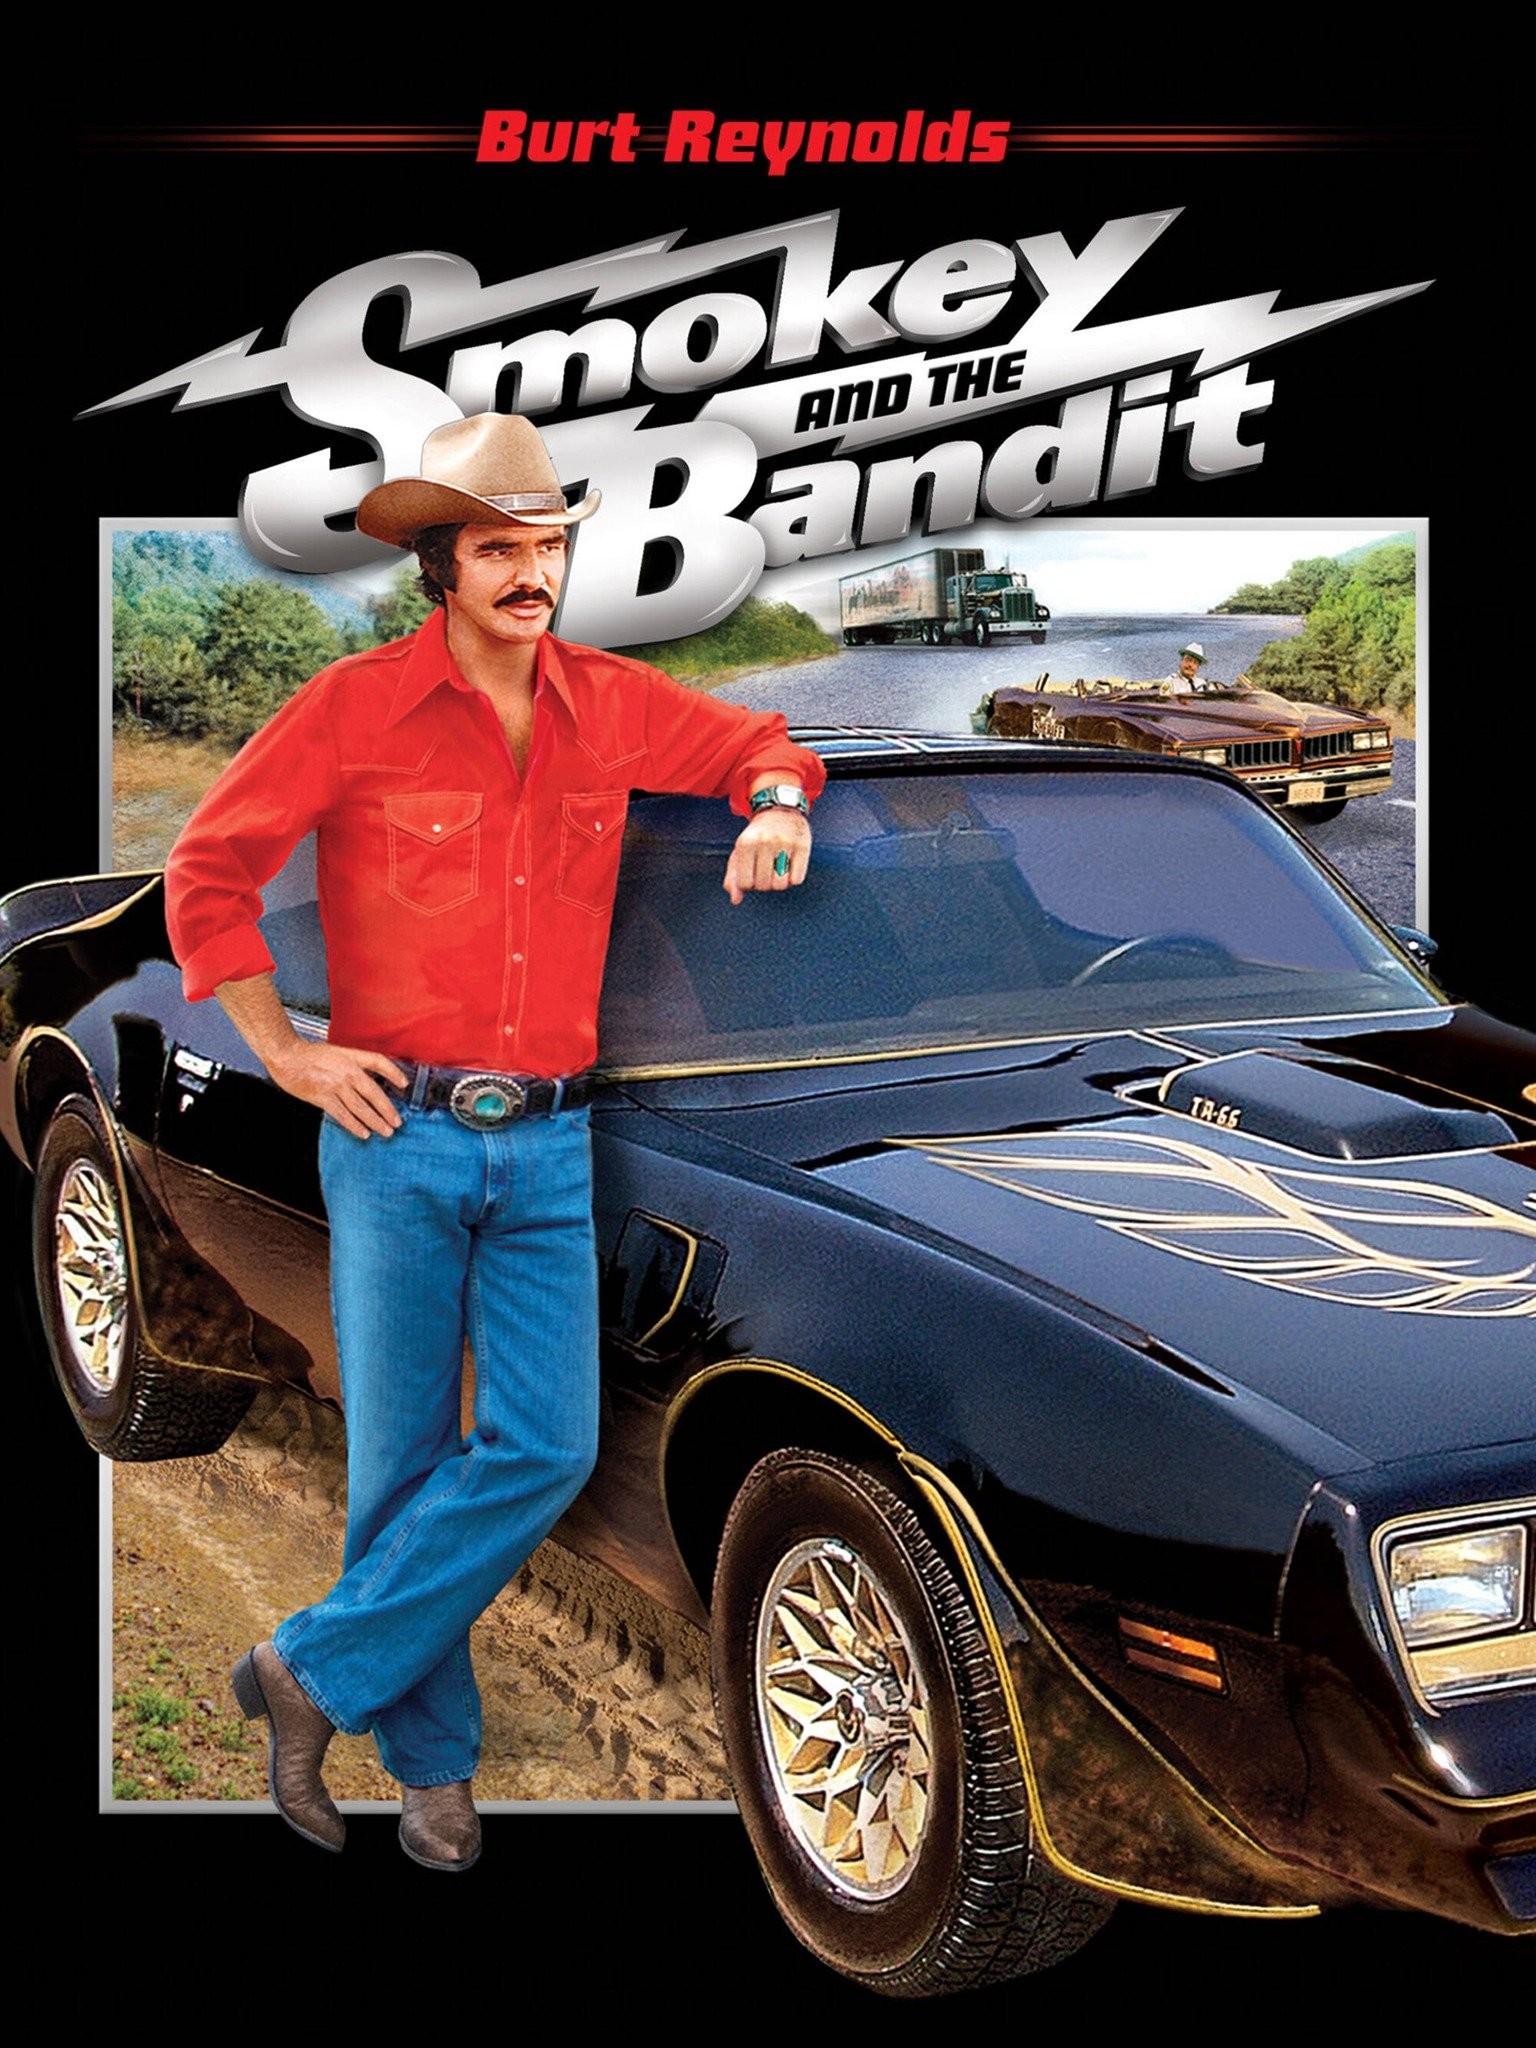 Smokey and the bandit pics